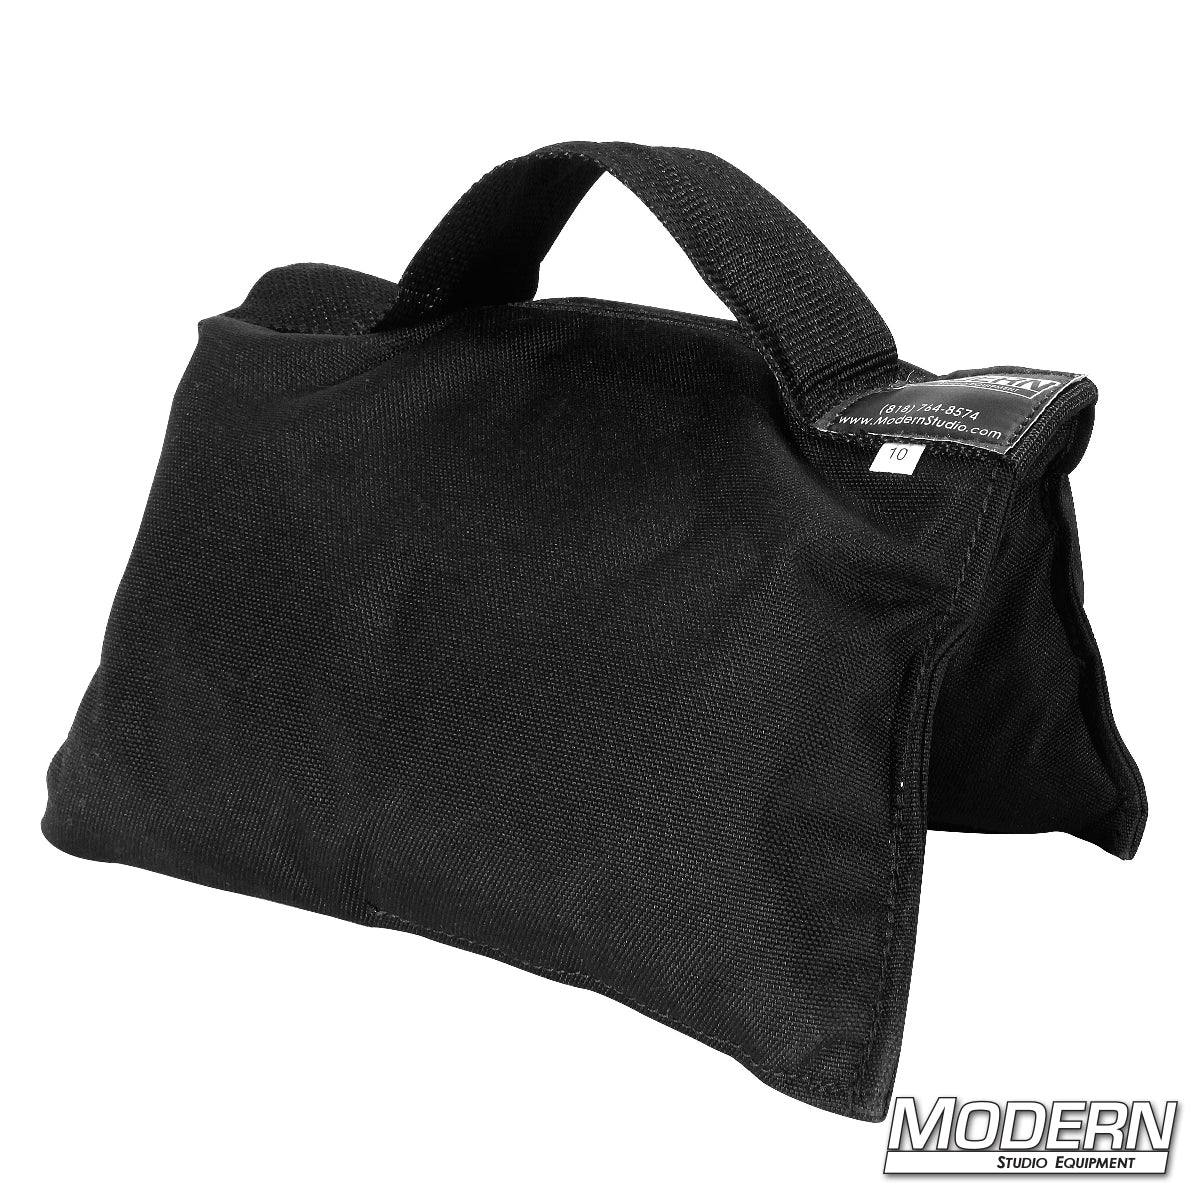 Sandbag (10 lbs.) - Black with Black Handle